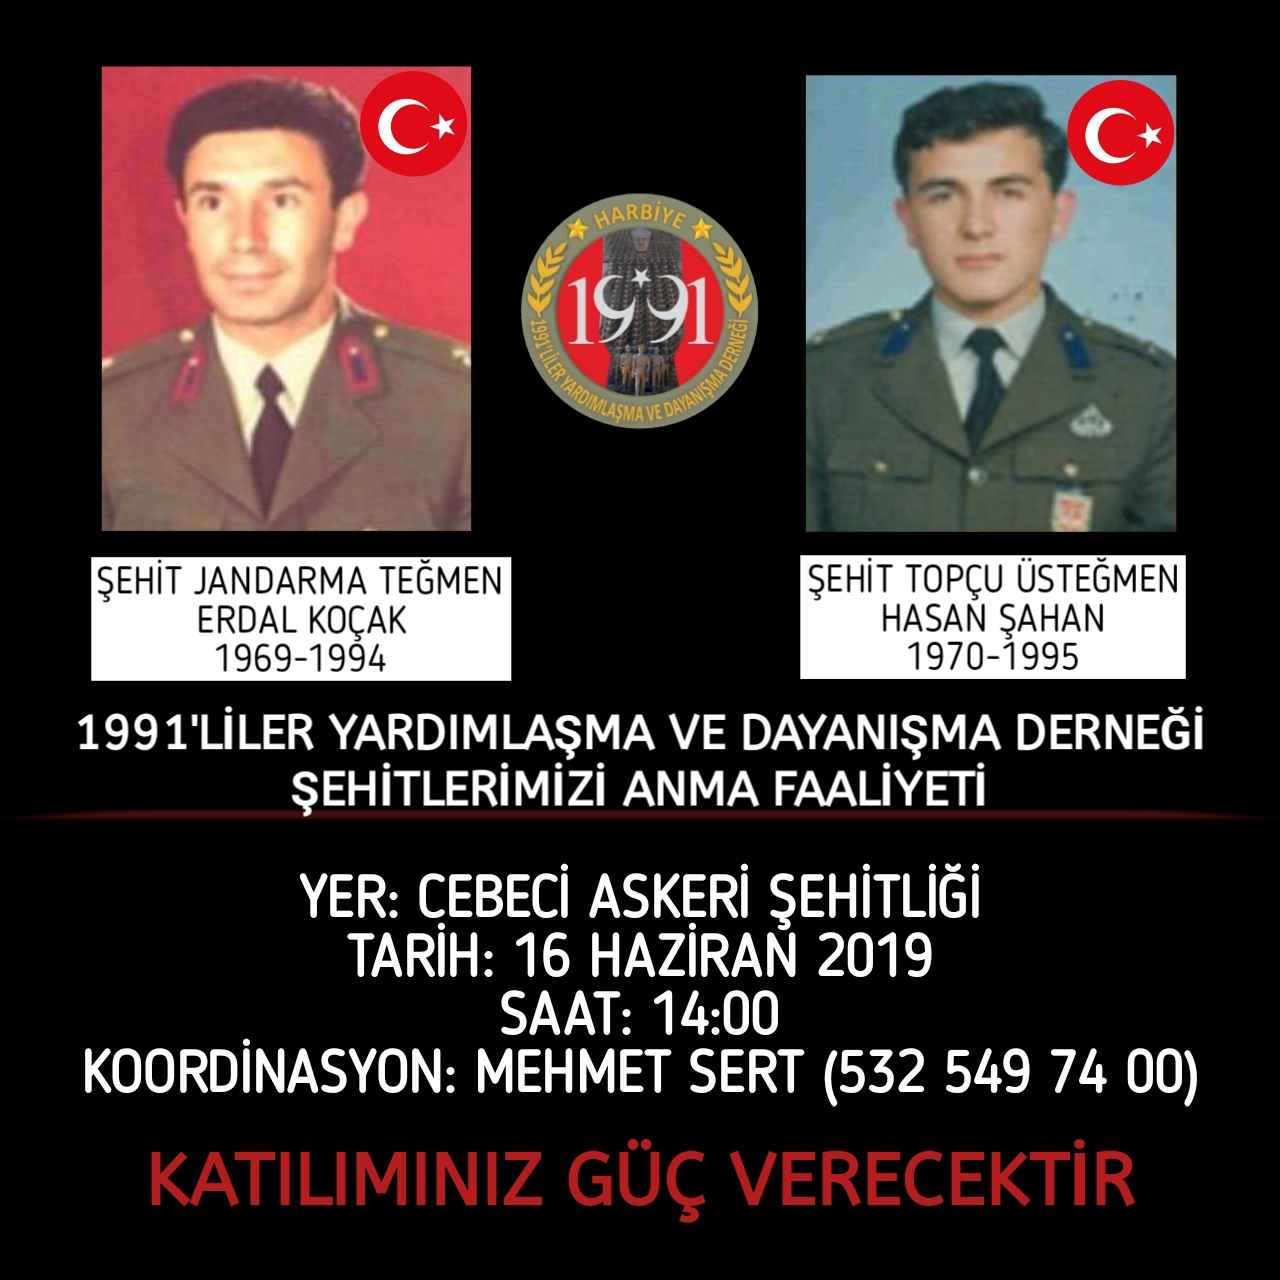 130- Şht. J. Tğm. Erdal KOÇAK ve Topçu Ütğm. Hasan ŞAHAN Anma Töreni (16.06.2019)